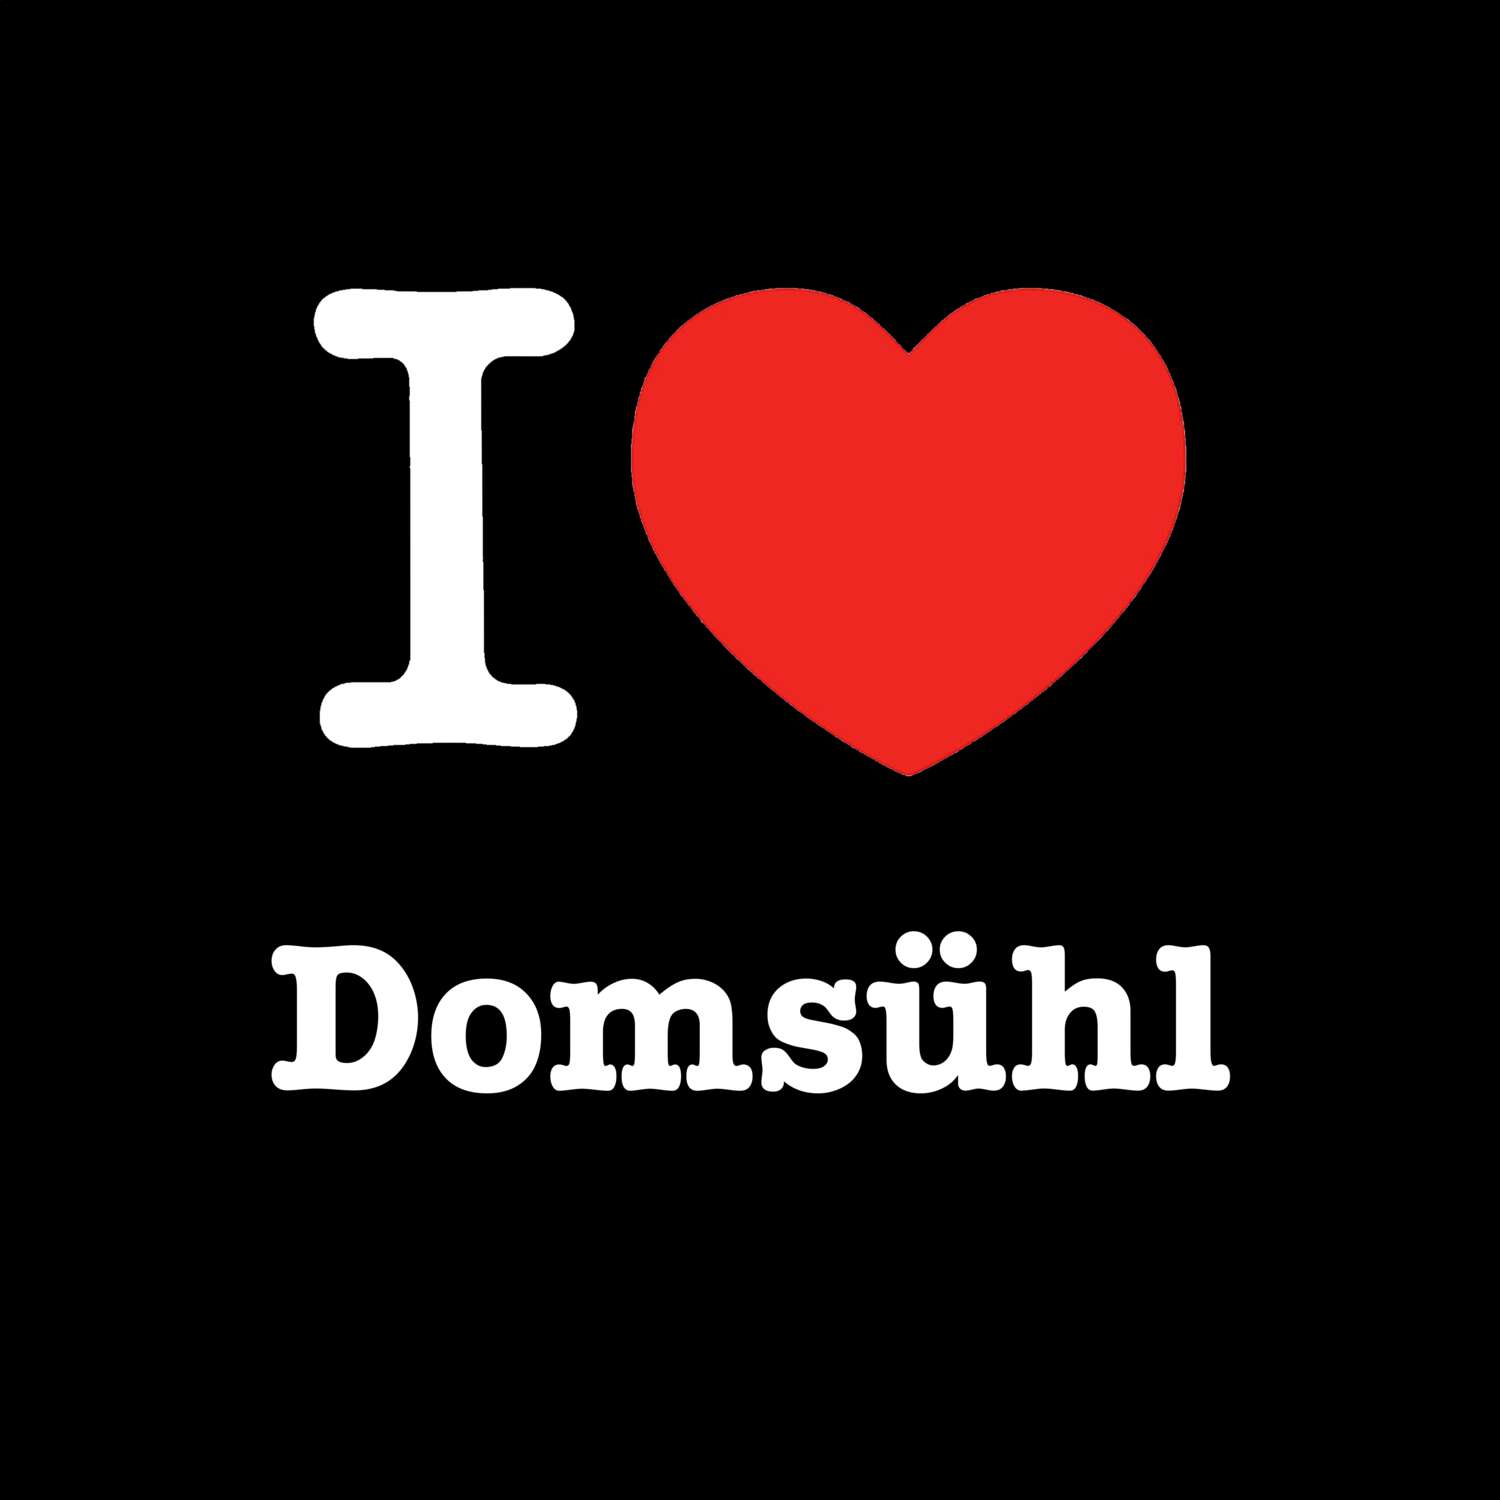 Domsühl T-Shirt »I love«